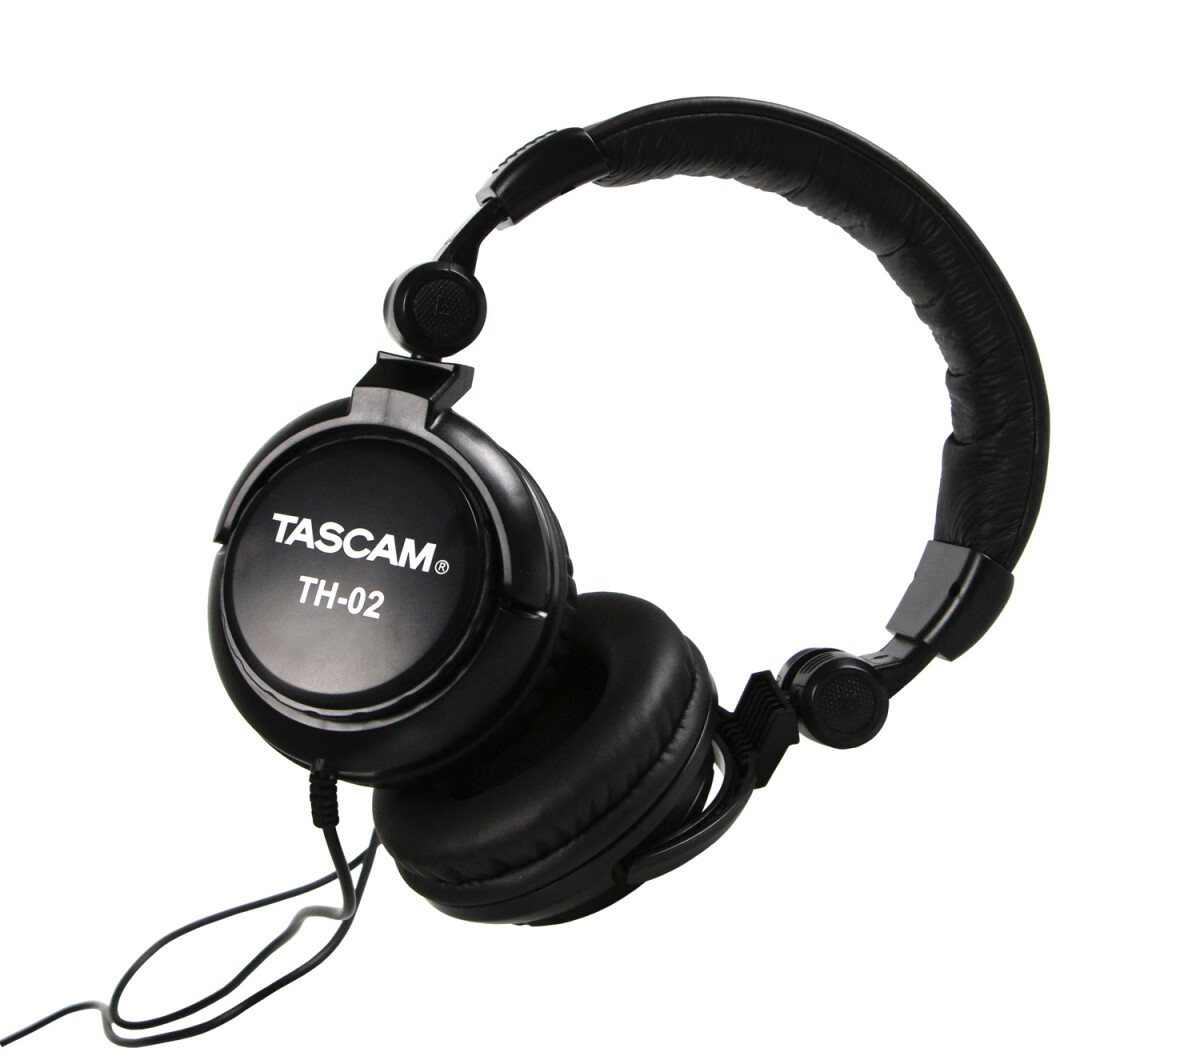 [NAMM] Tascam announces the TH-02 headphones